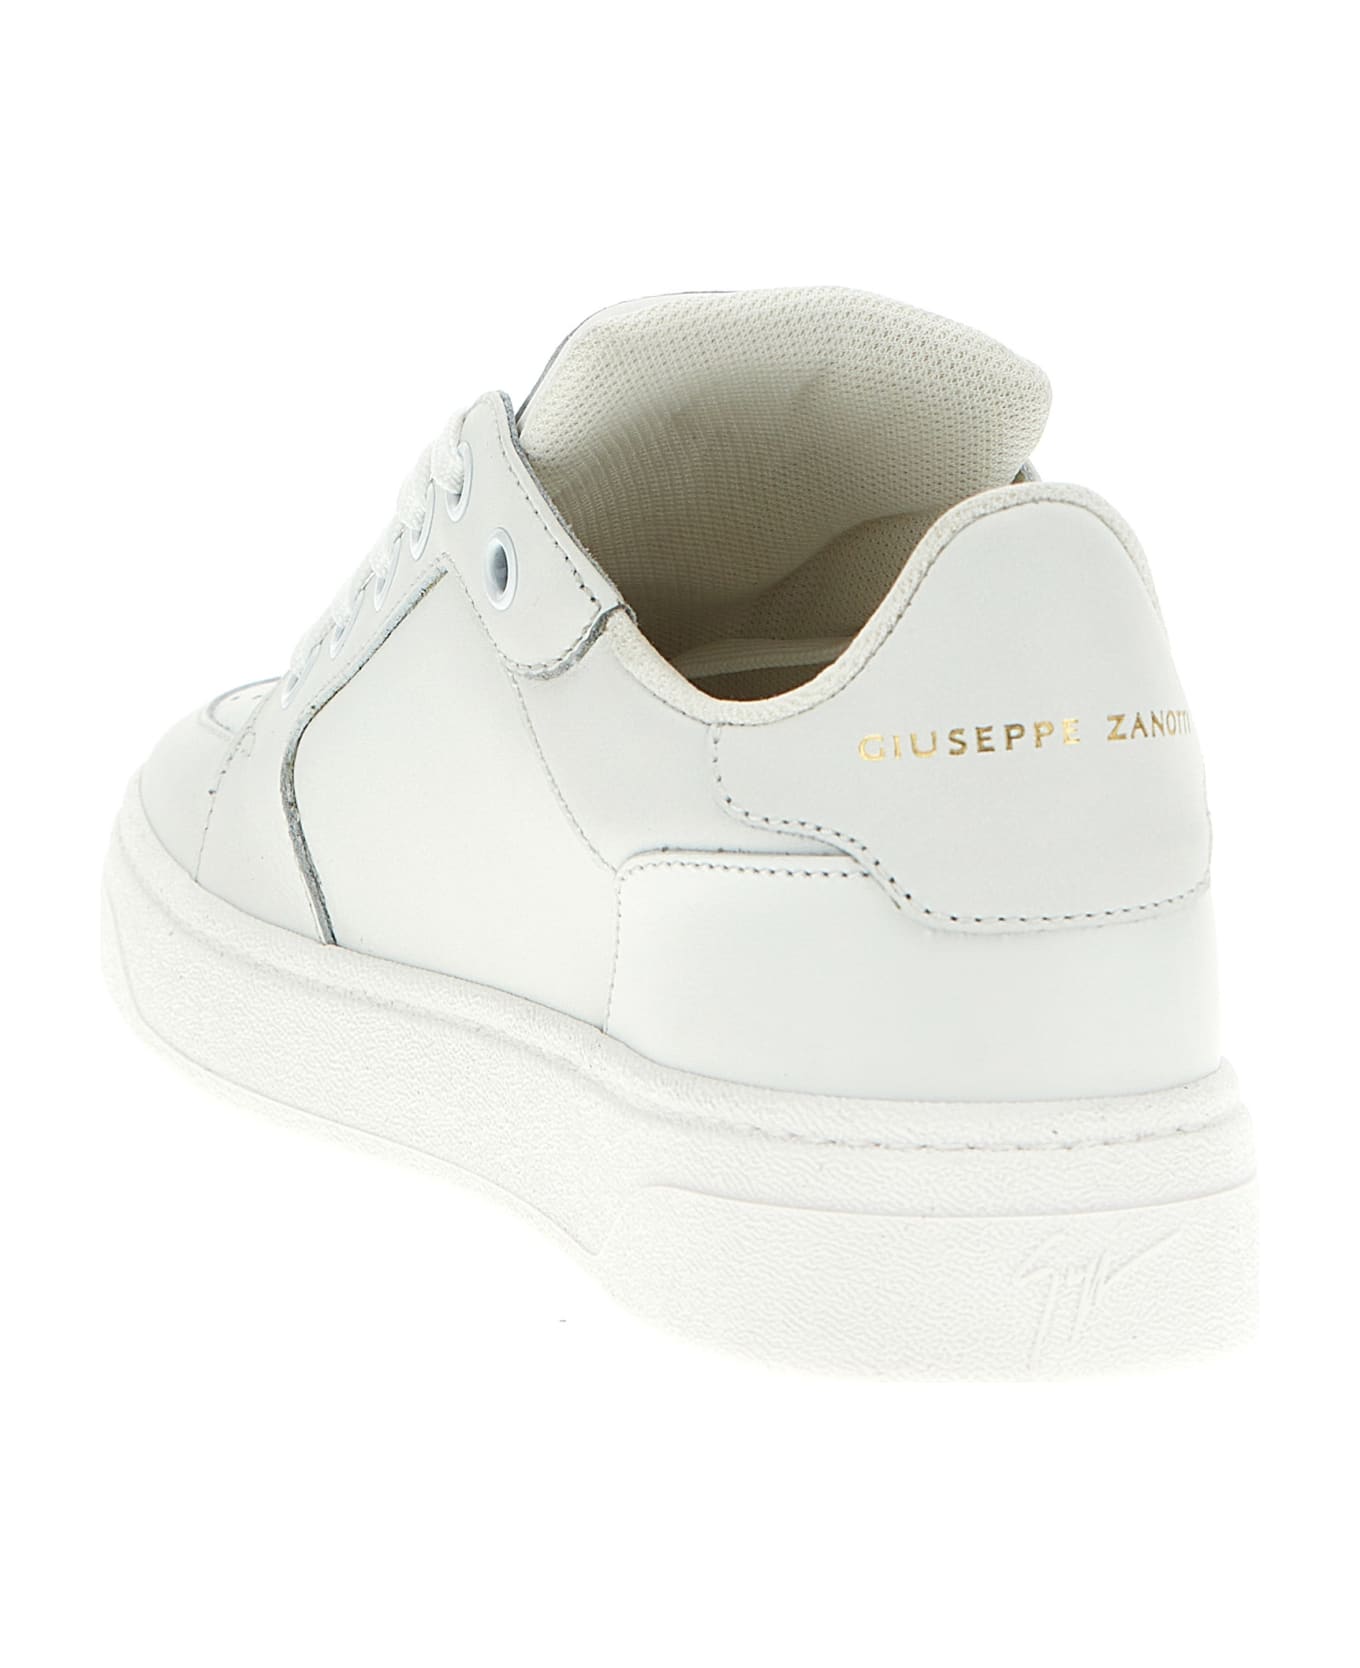 Giuseppe Zanotti 'gz/94' Sneakers - White